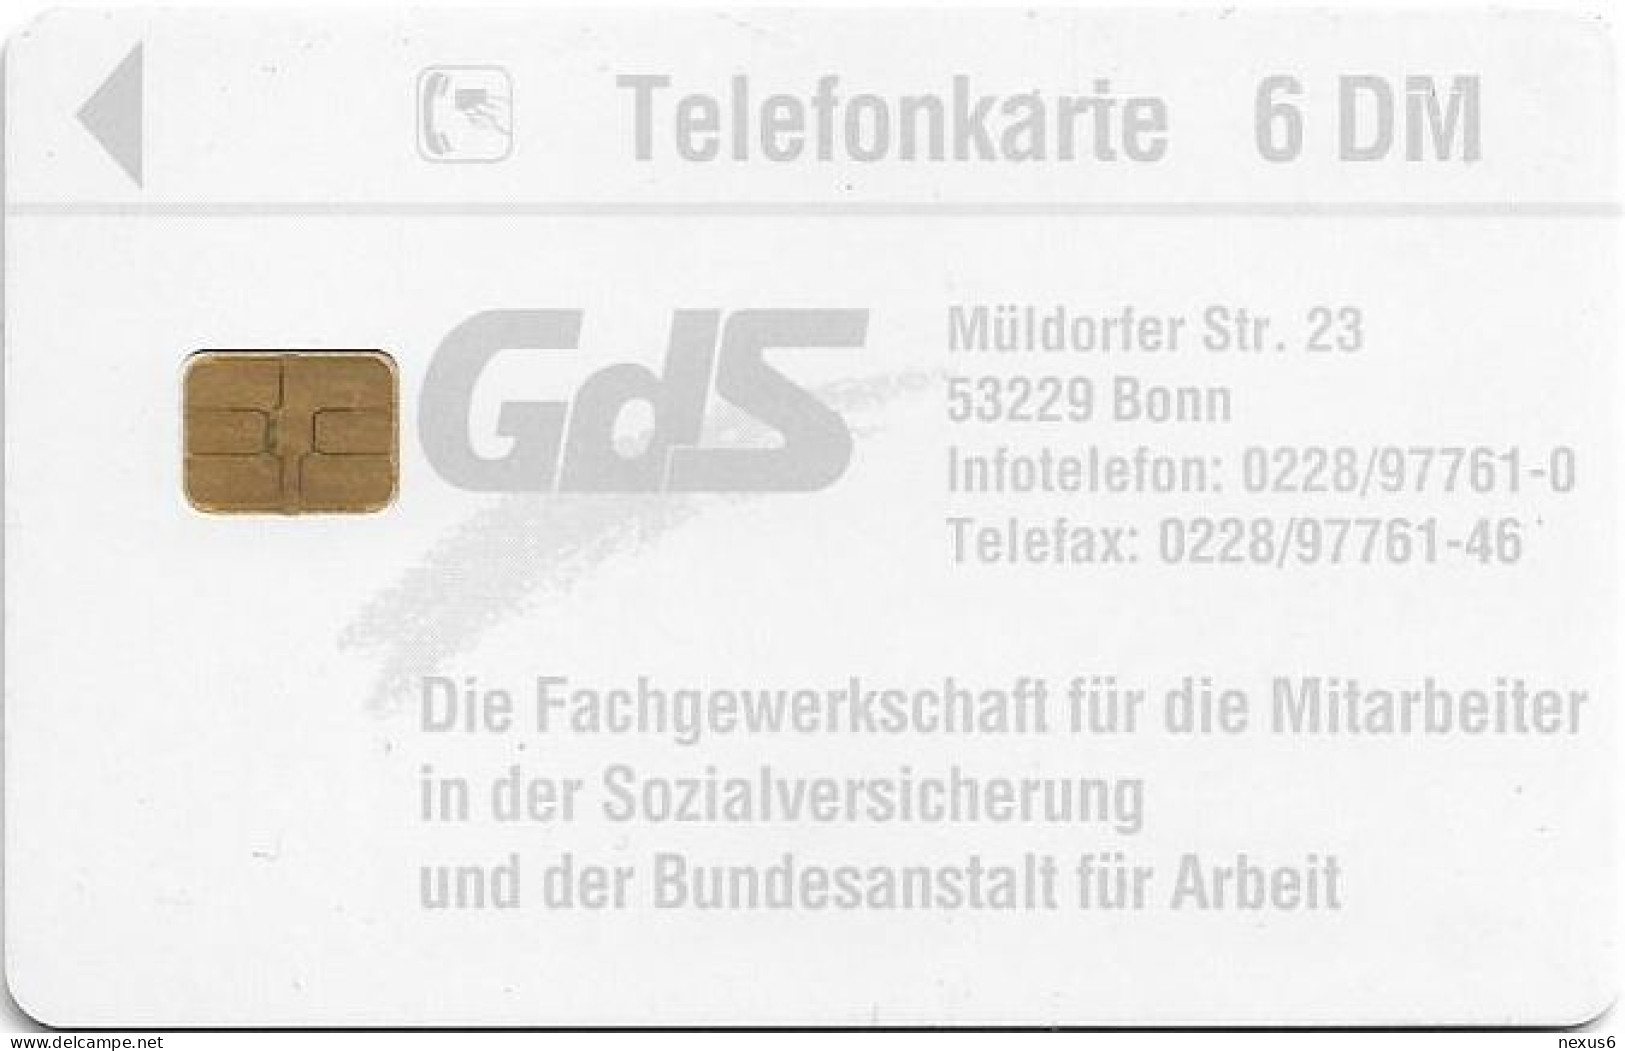 Germany - GdS - Gewerkschaft Der Sozialversicherung 2 - O 0387 - 03.1995, 6DM, 2.000ex, Used - O-Serie : Serie Clienti Esclusi Dal Servizio Delle Collezioni